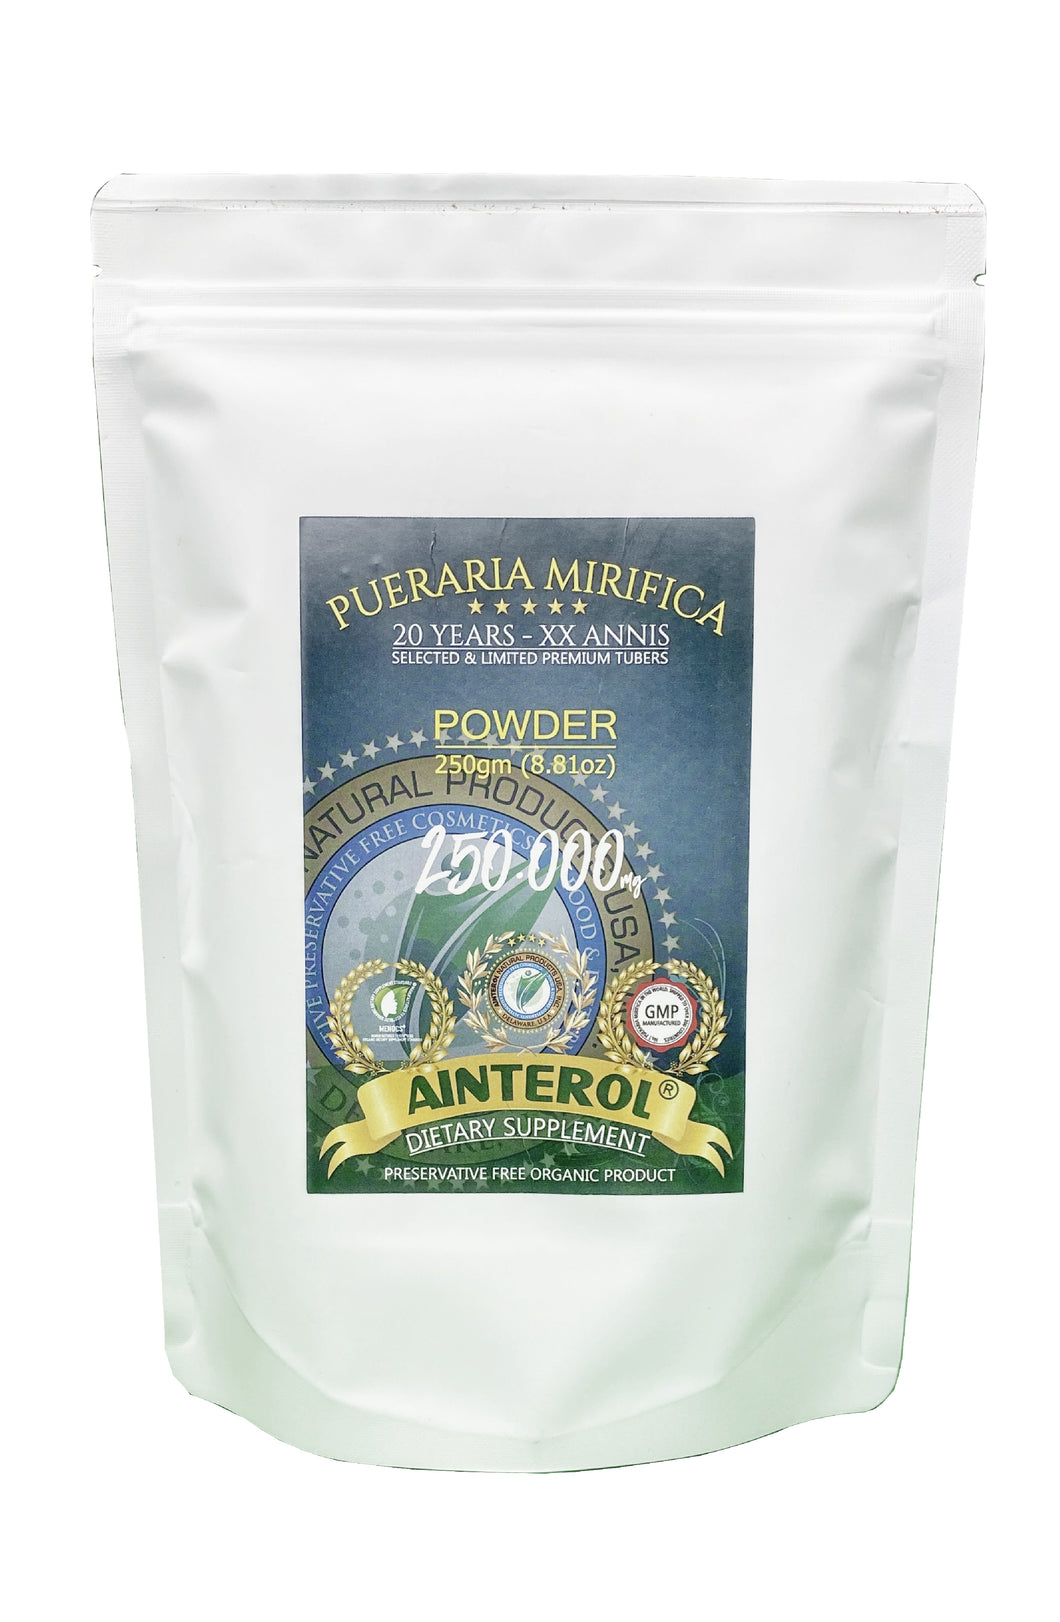 AINTEROL® Poudre de Pueraria Mirifica - 250gm (8.81oz)